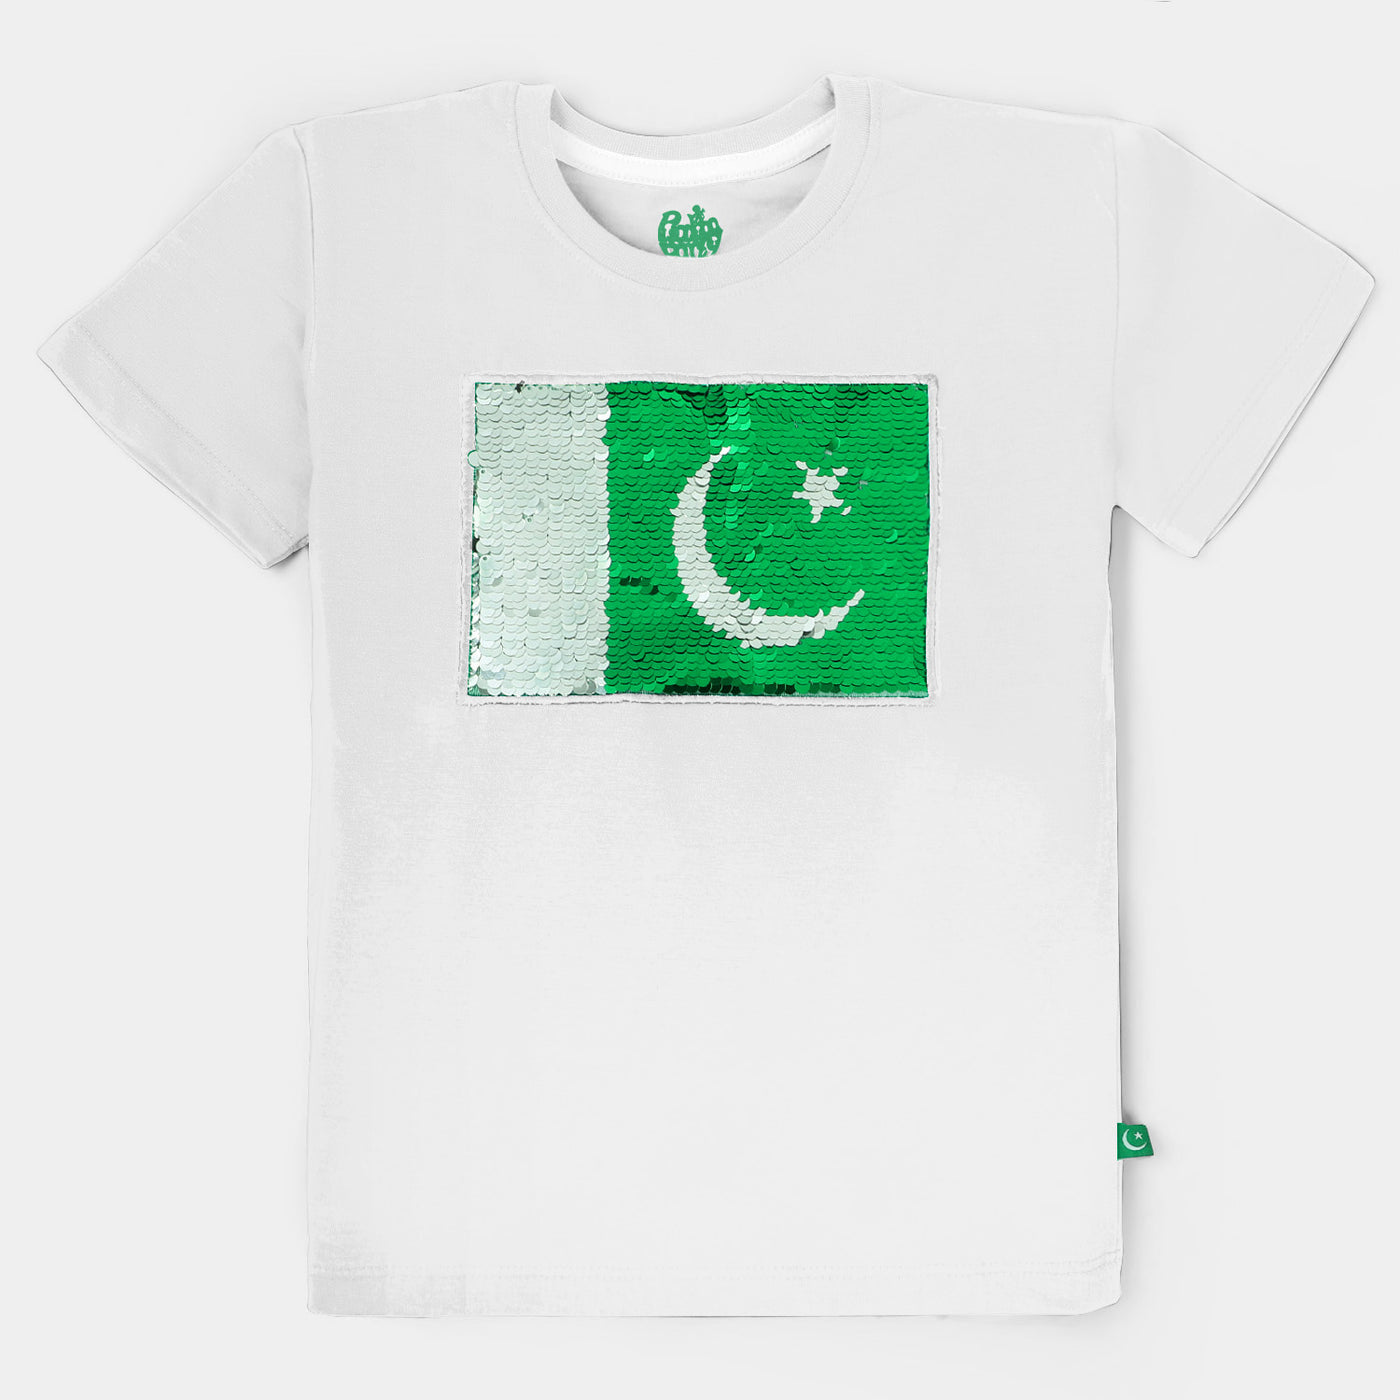 Unisex T-Shirt Pakistan Flag - B. White